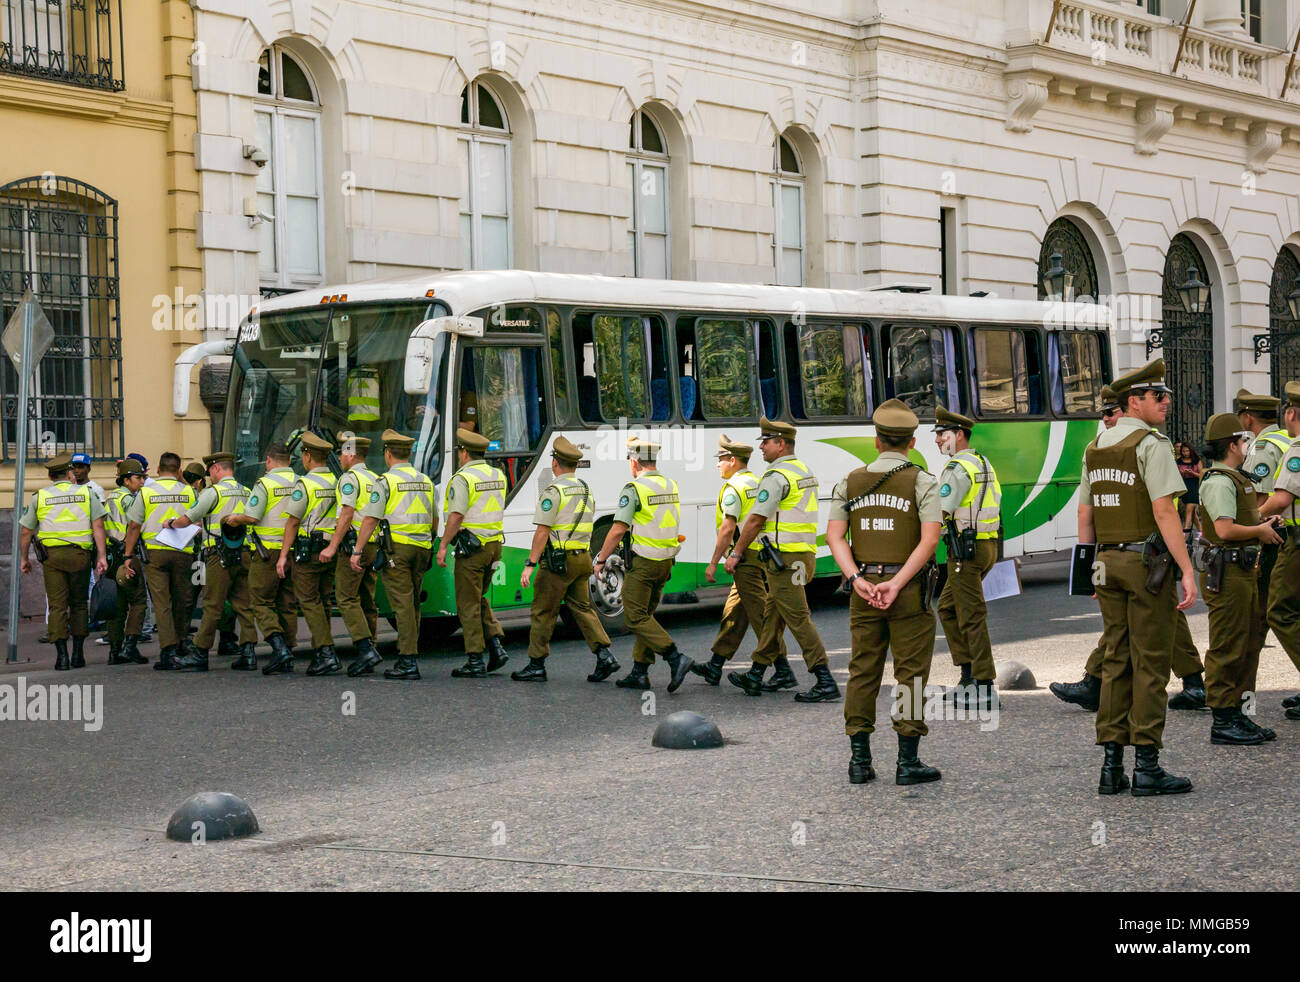 Good Friday, Carabineros or Chilean police in a line boarding a bus, Plaza de Armas, Santiago, Chile, South America Stock Photo